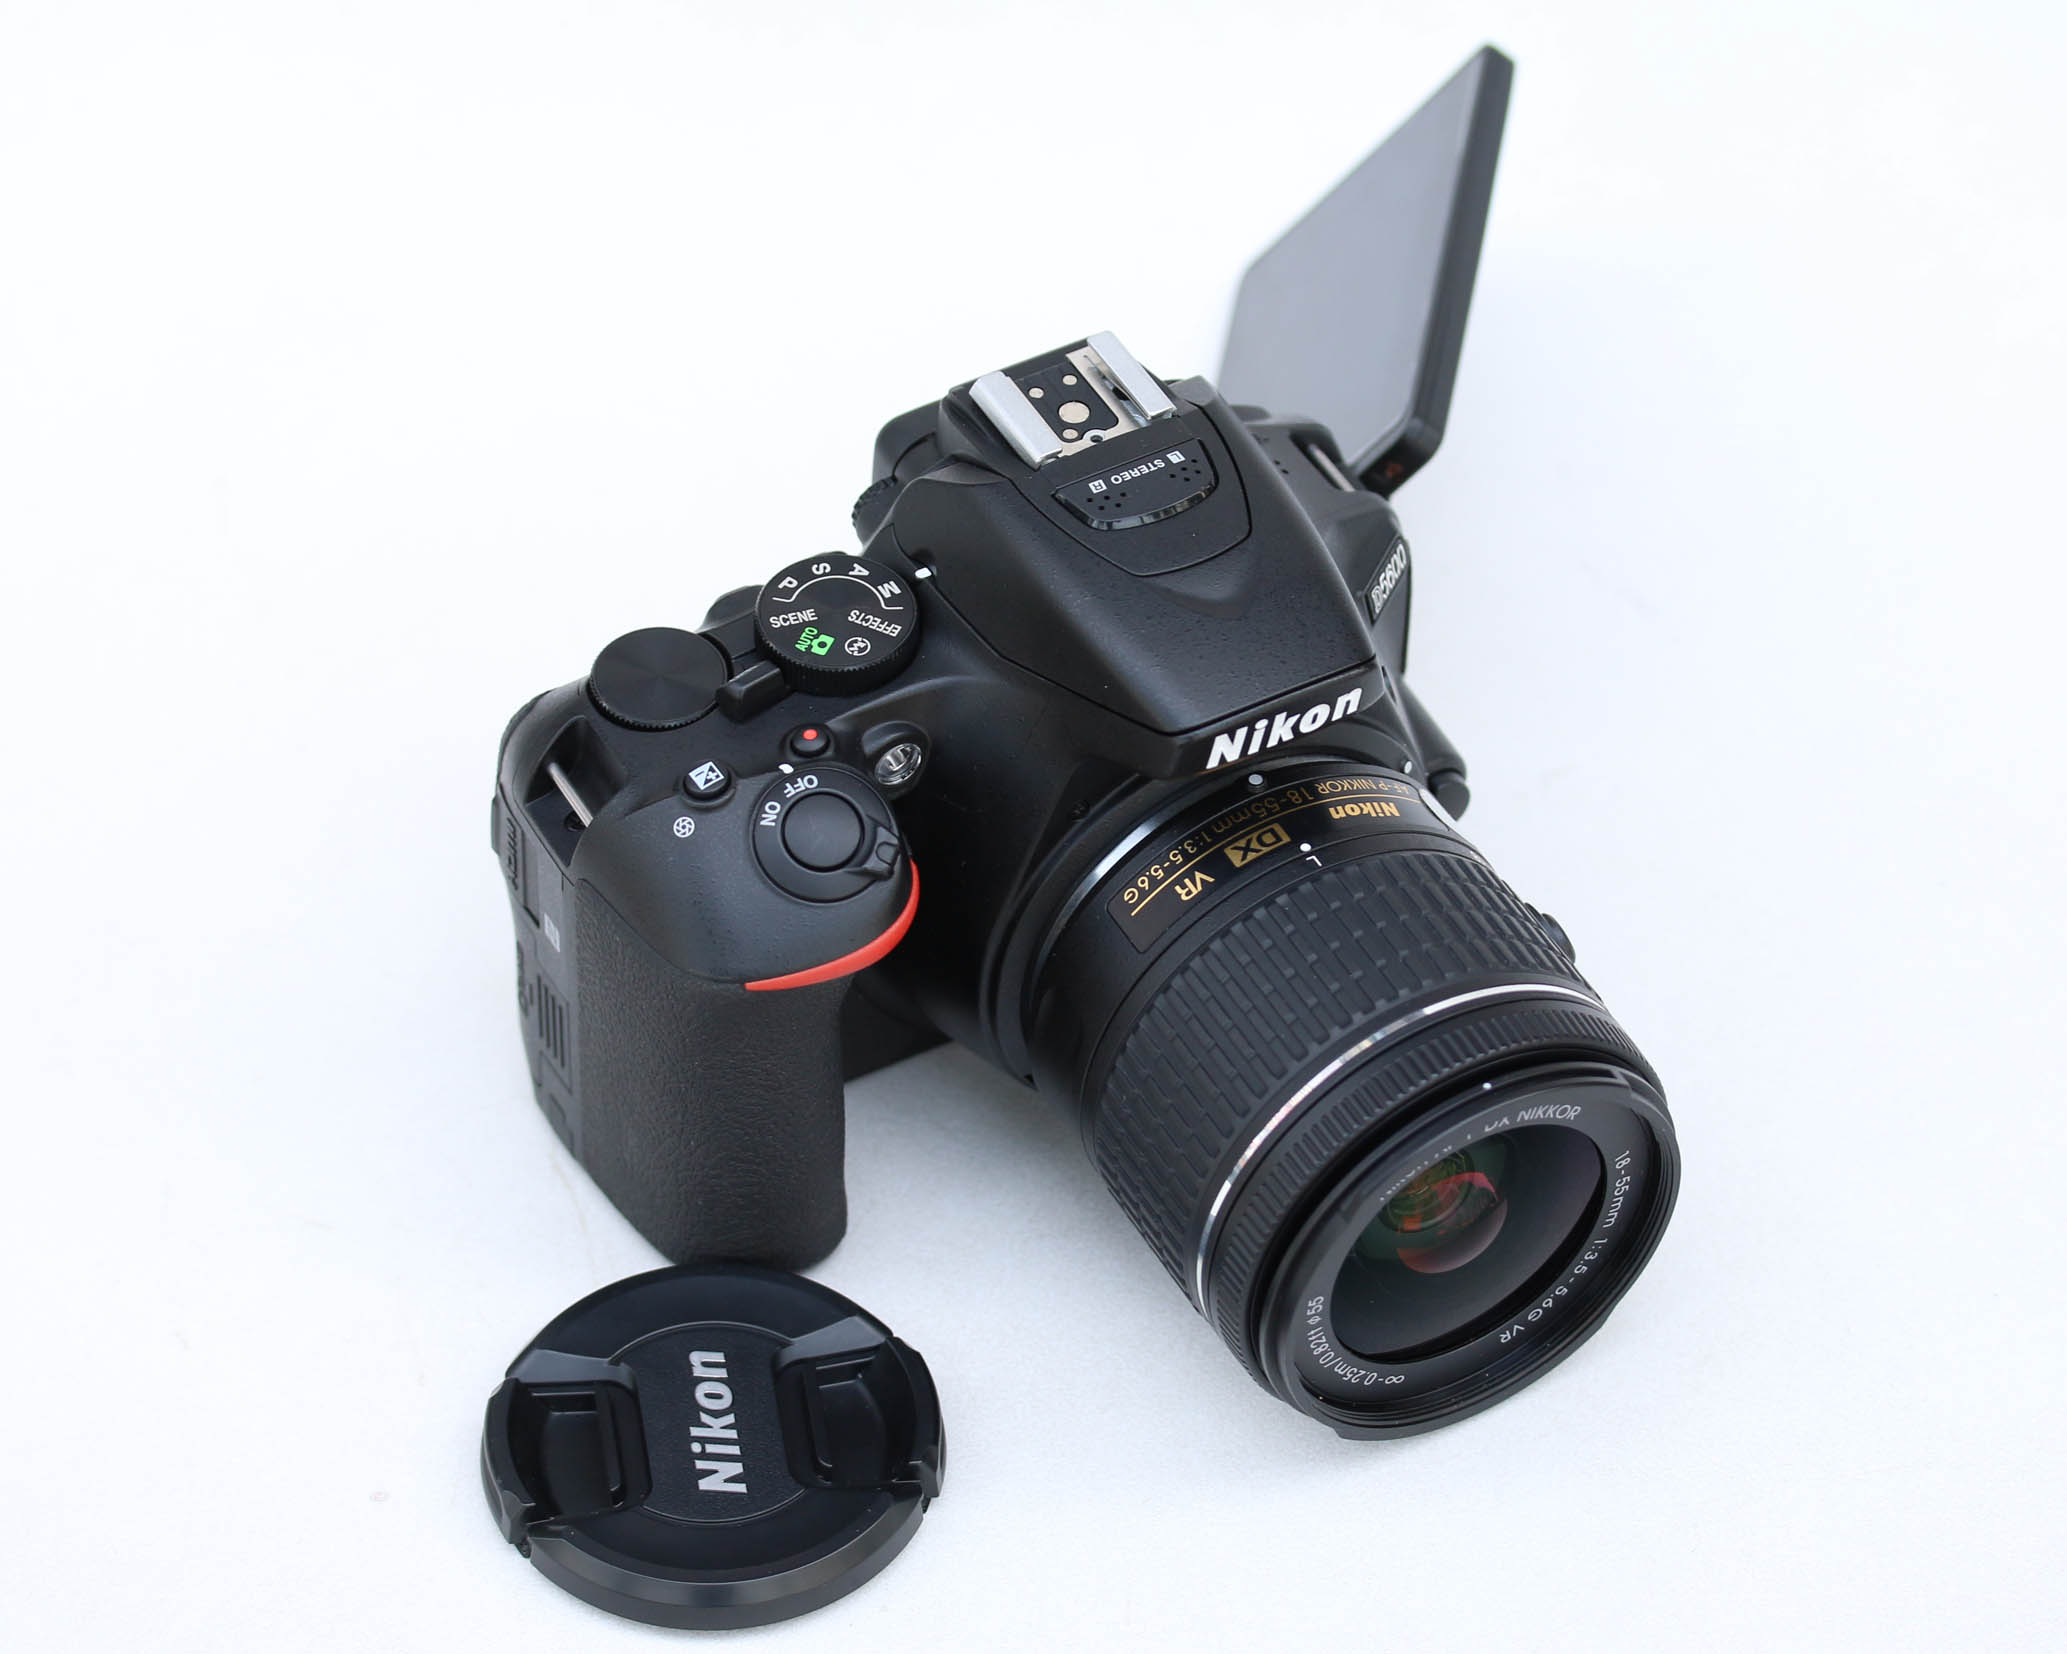 Nikon D5600 Kit Nikon 18-55mm AF-P